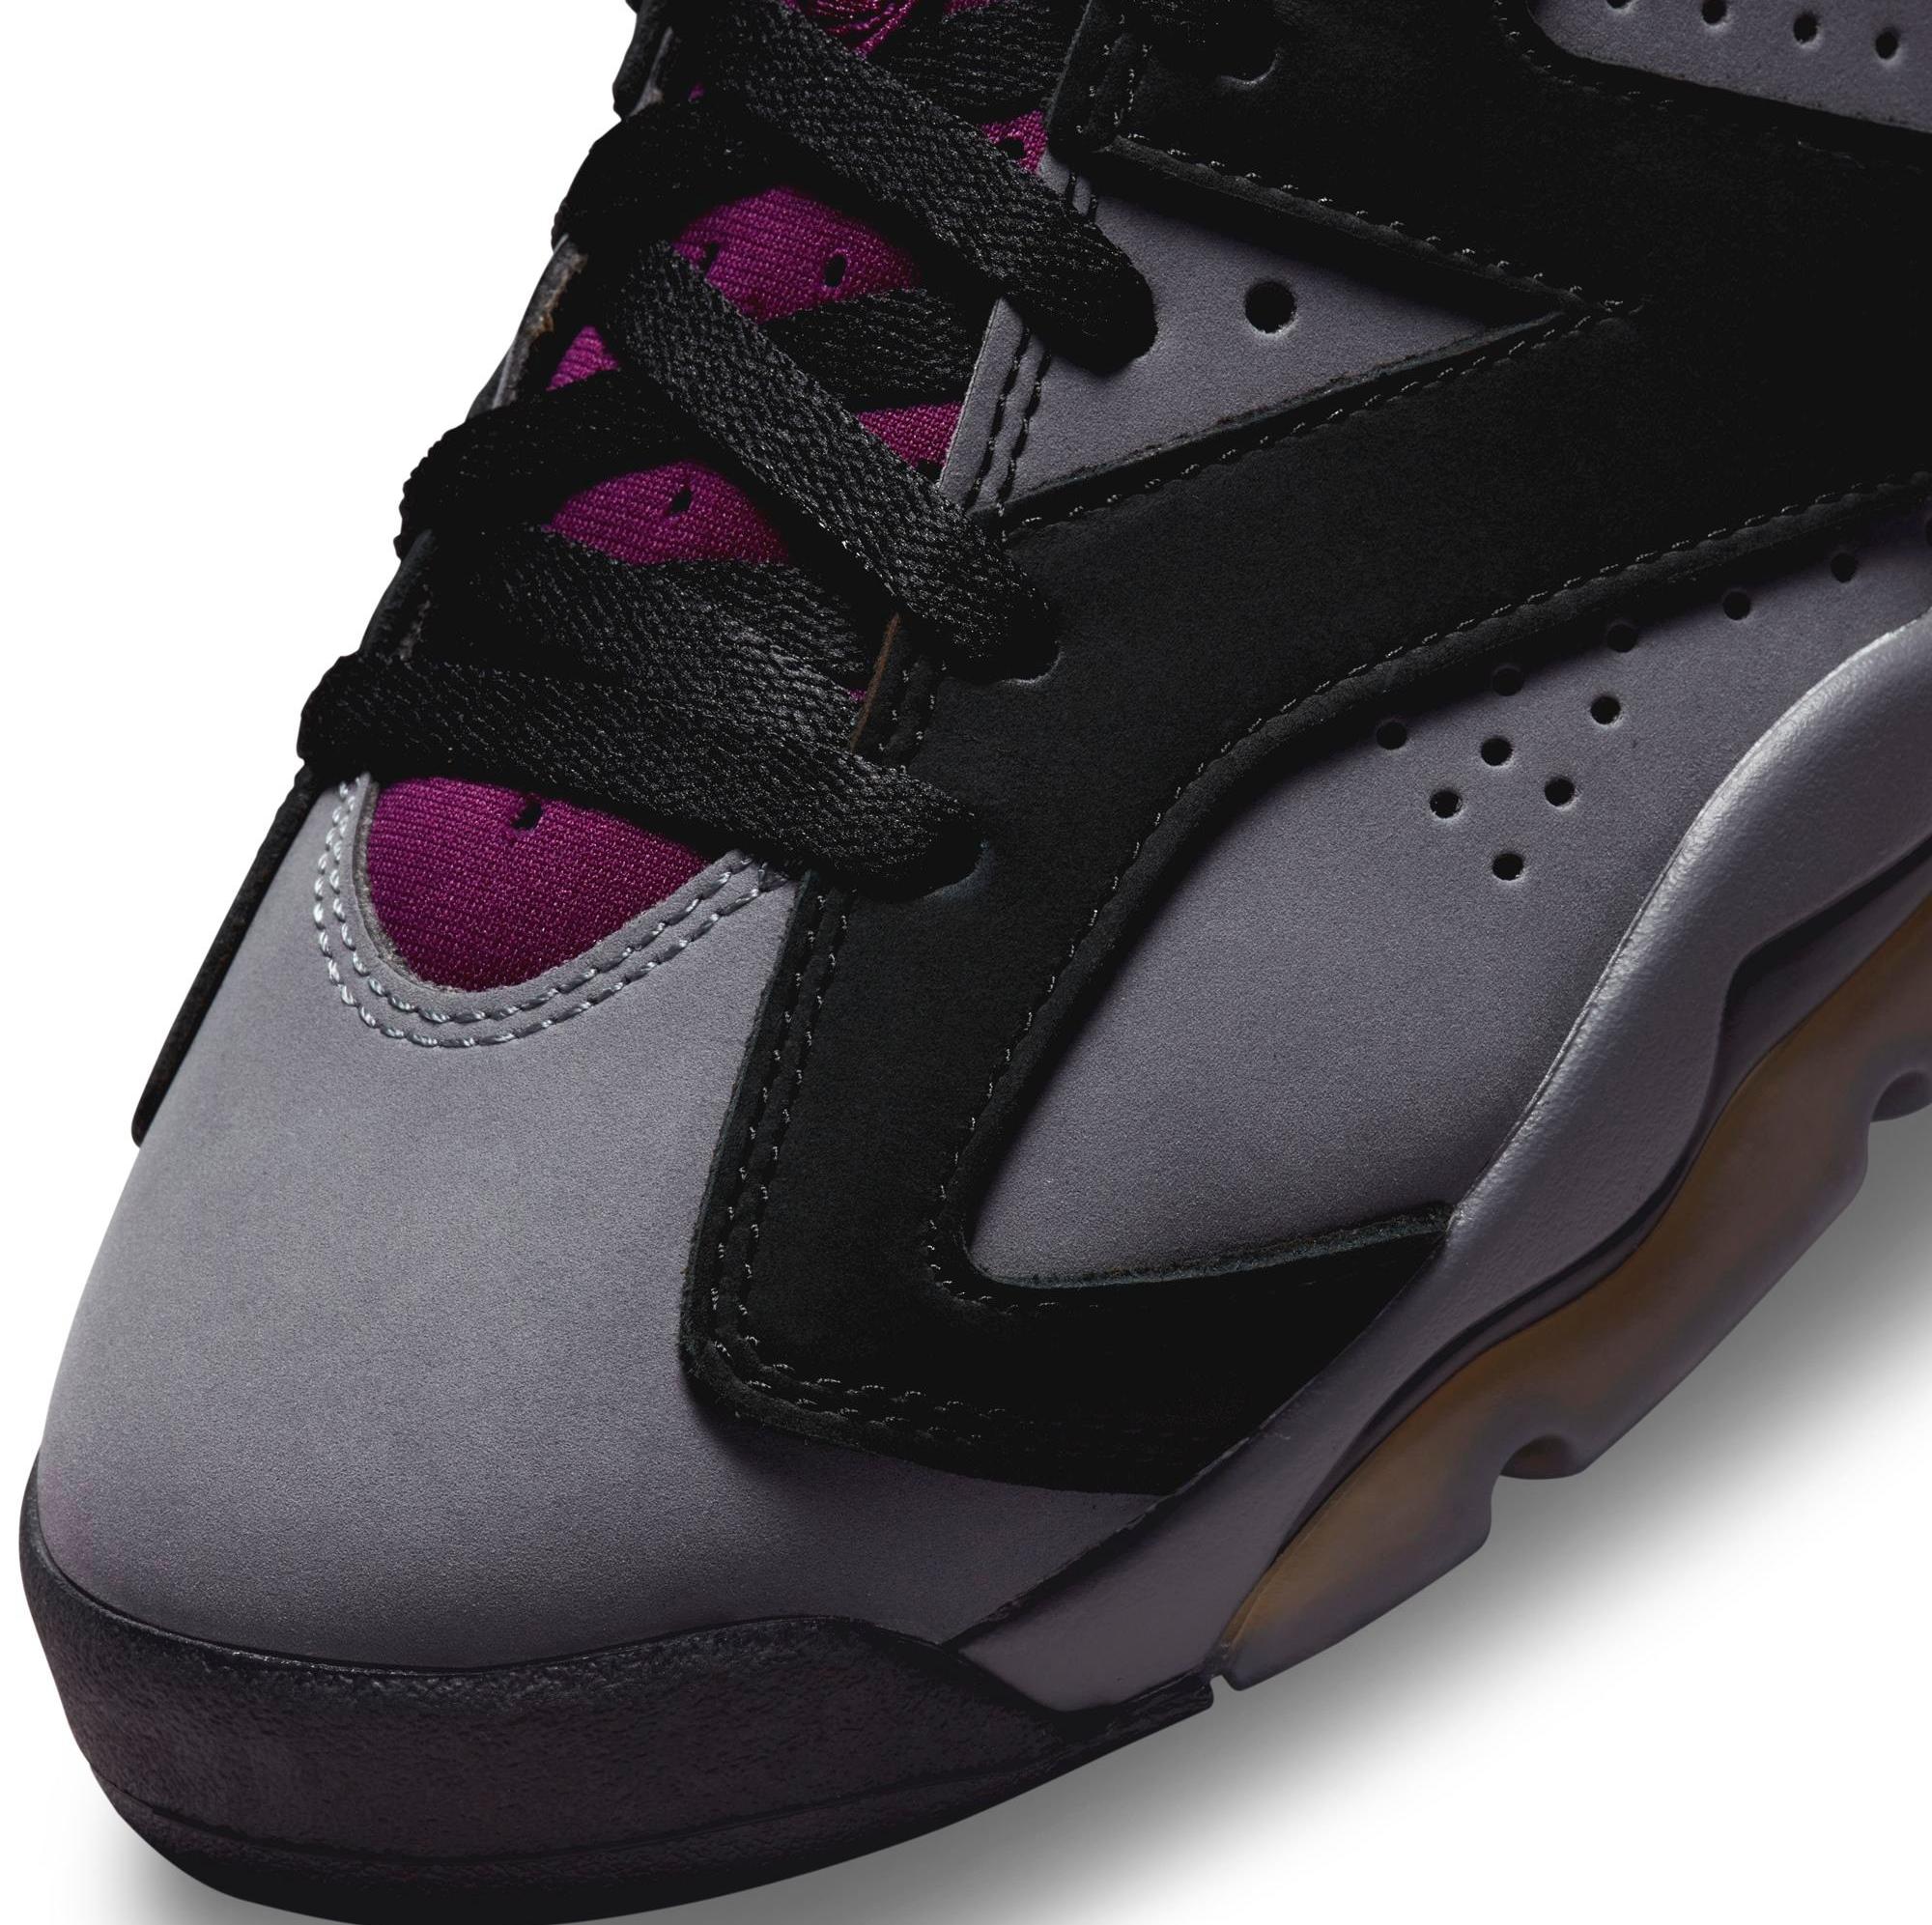 Sneakers Release – Jordan 6 Retro “Bordeaux” Launches in Full Family